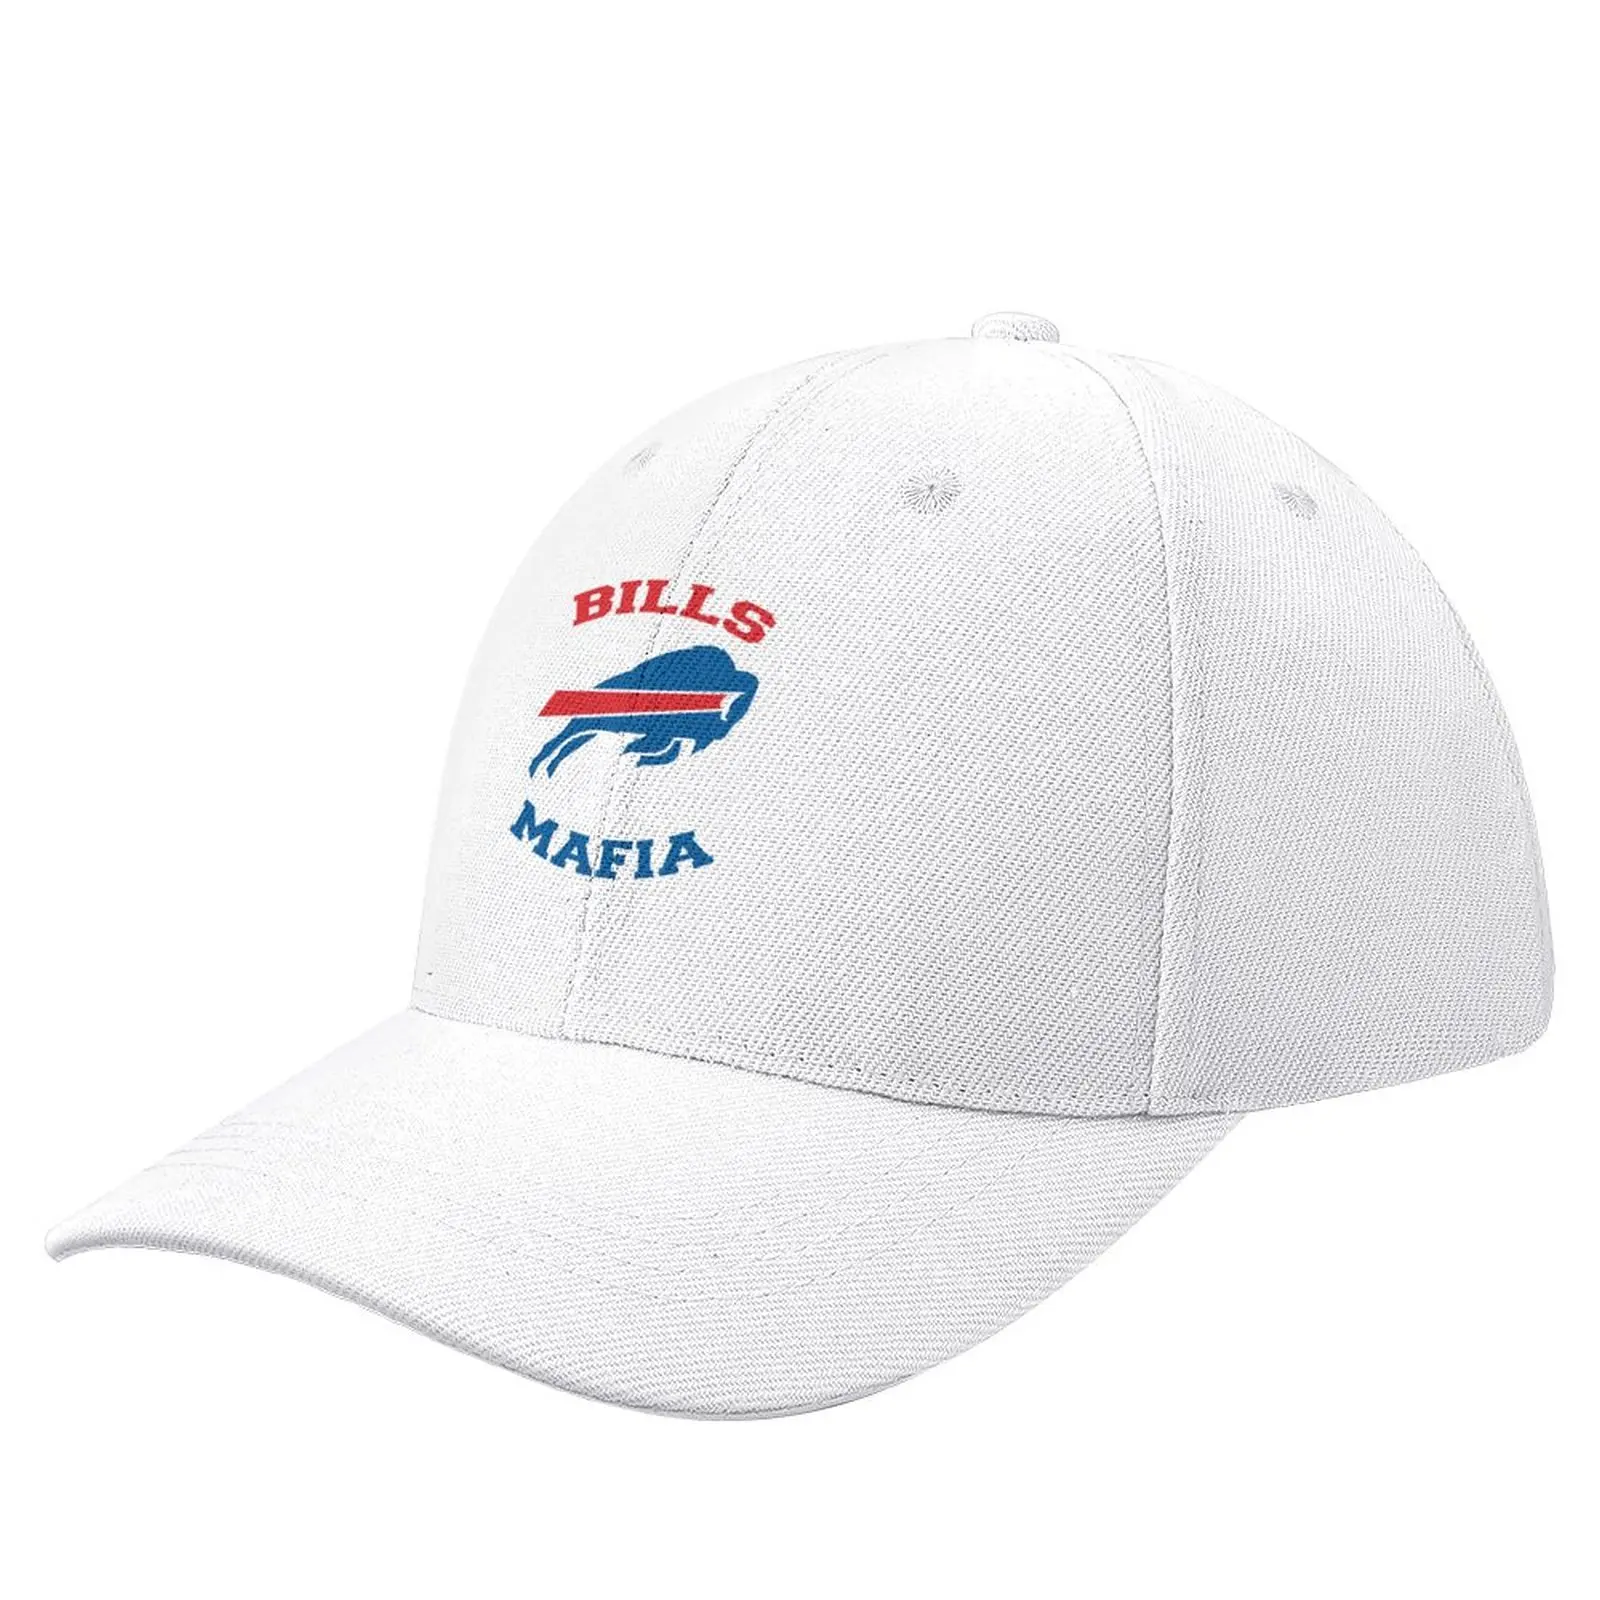 

Bills-Mafia T-Shirt Baseball Cap Anime Hat funny hat Hats For Women Men's